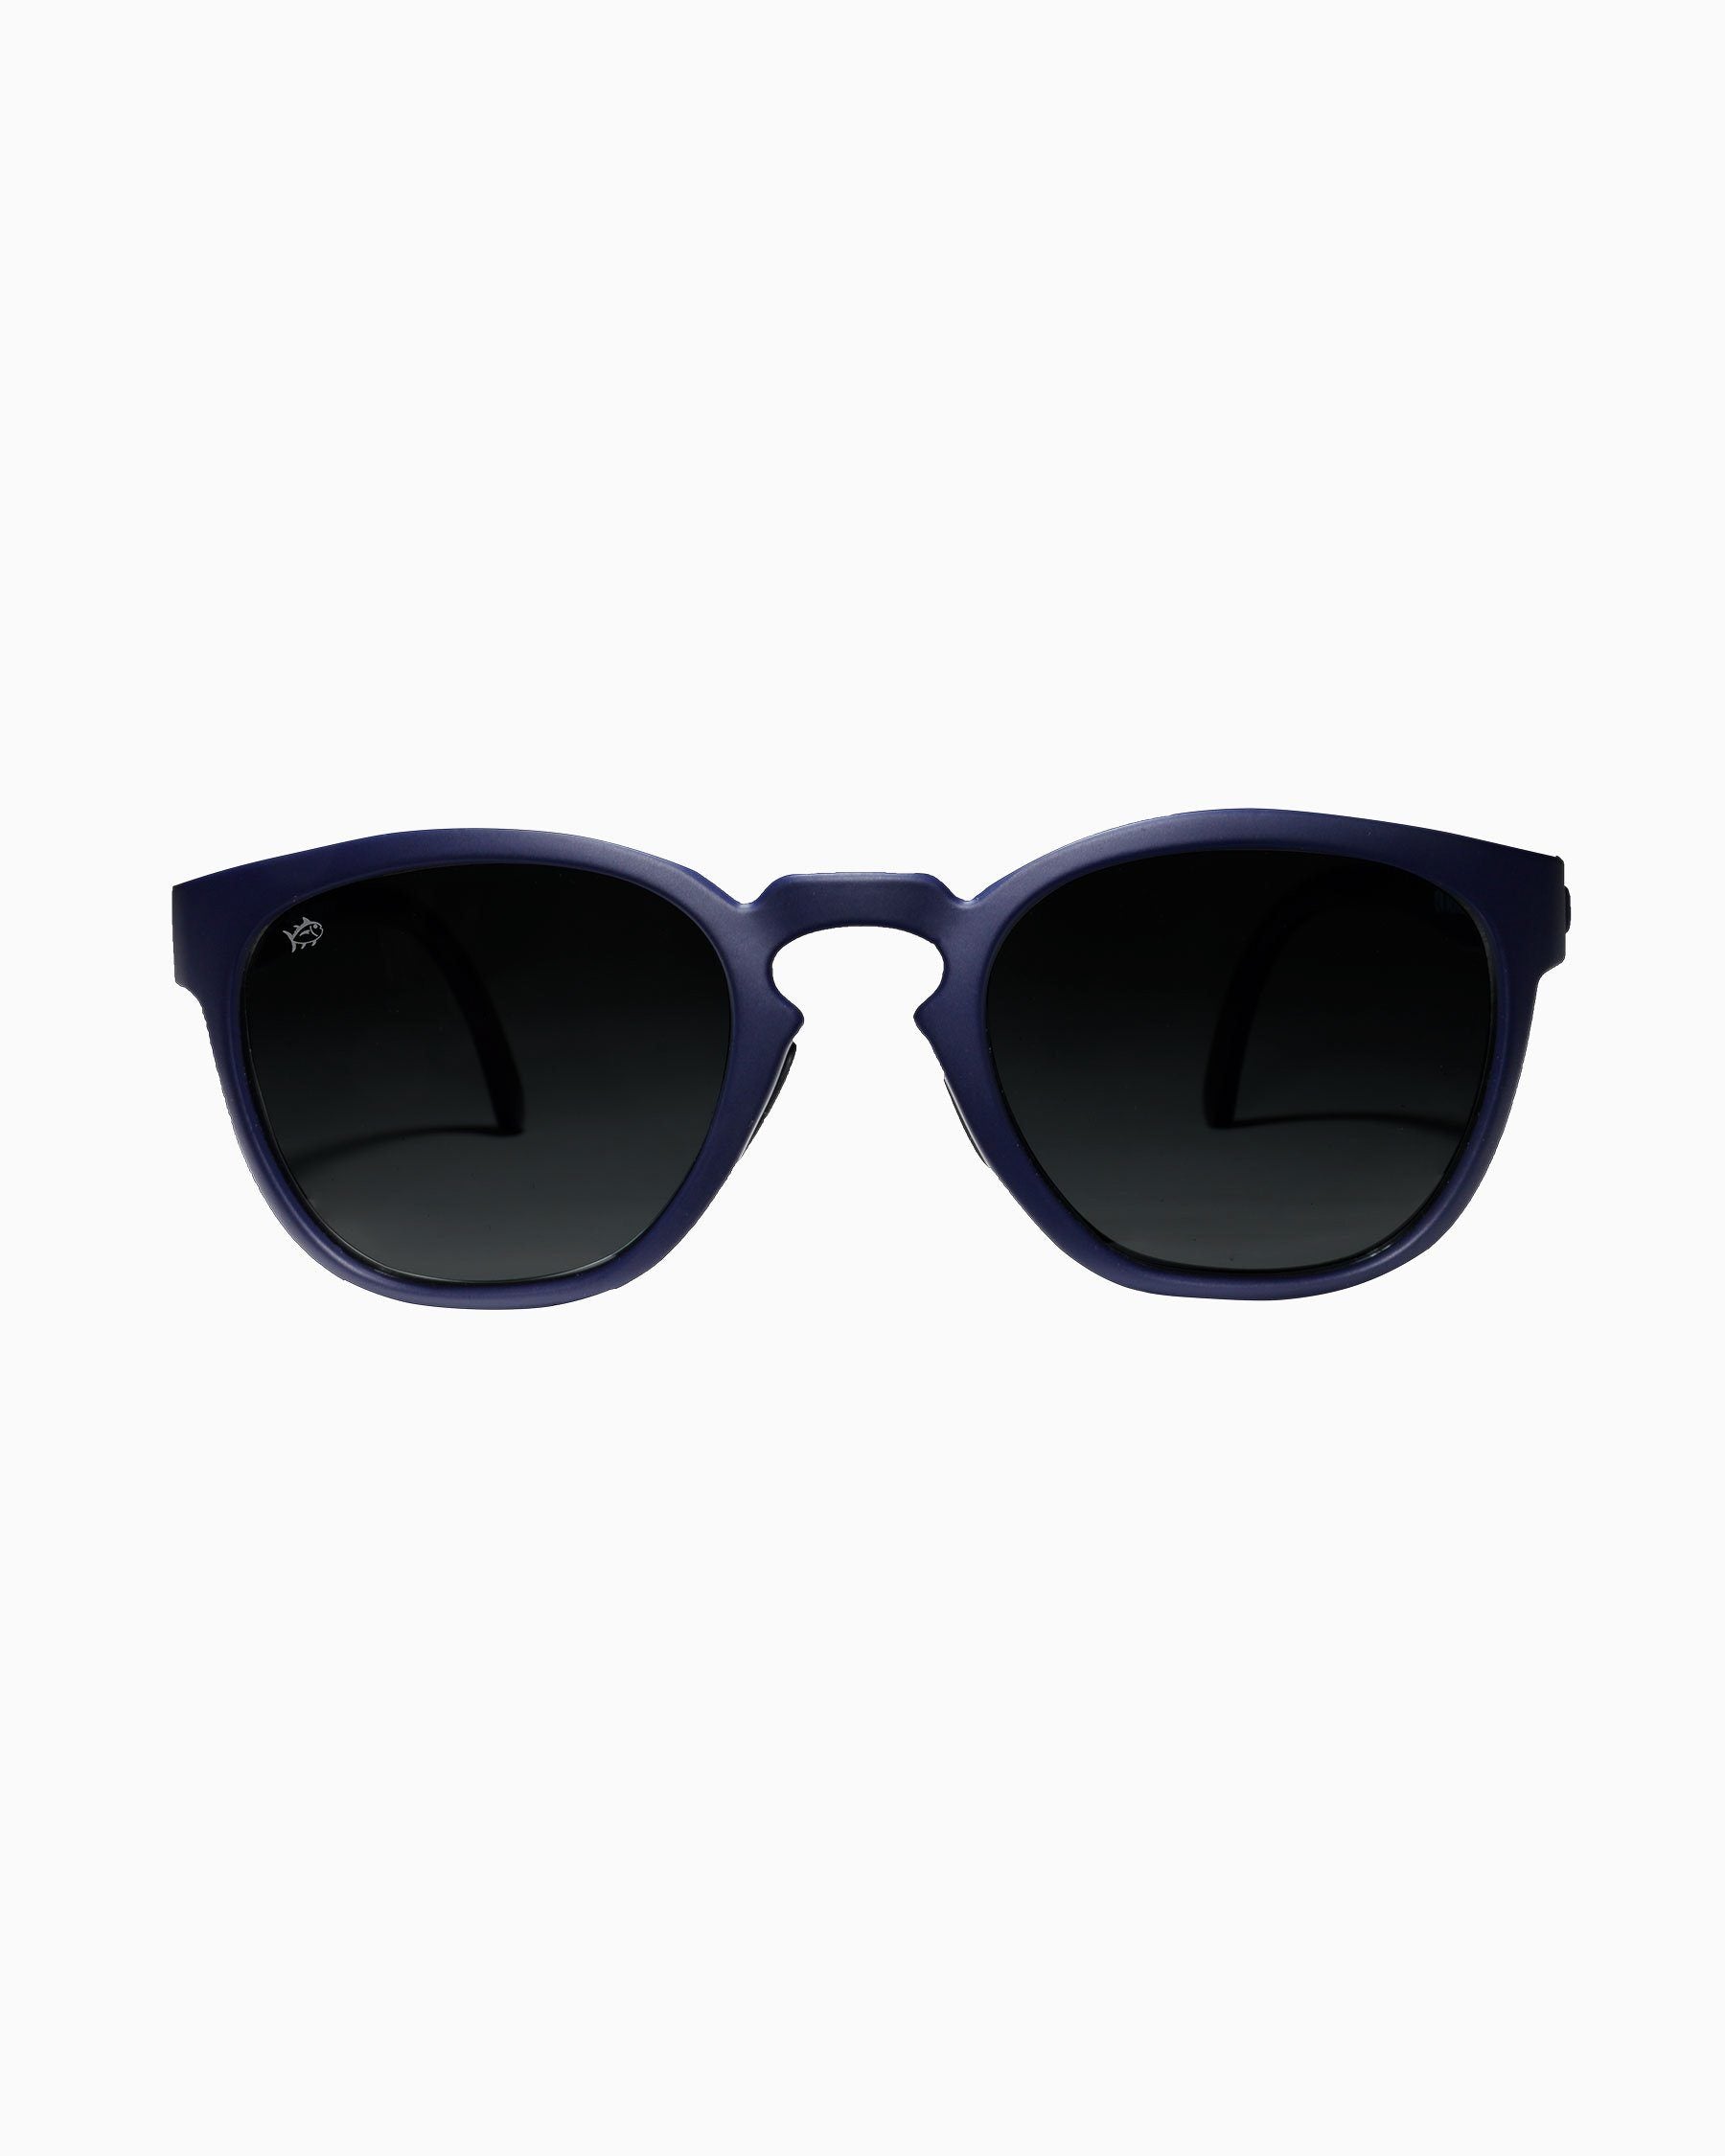 RHEOS Sunglasses Edistos-Boat Blue/Marine 2118-520